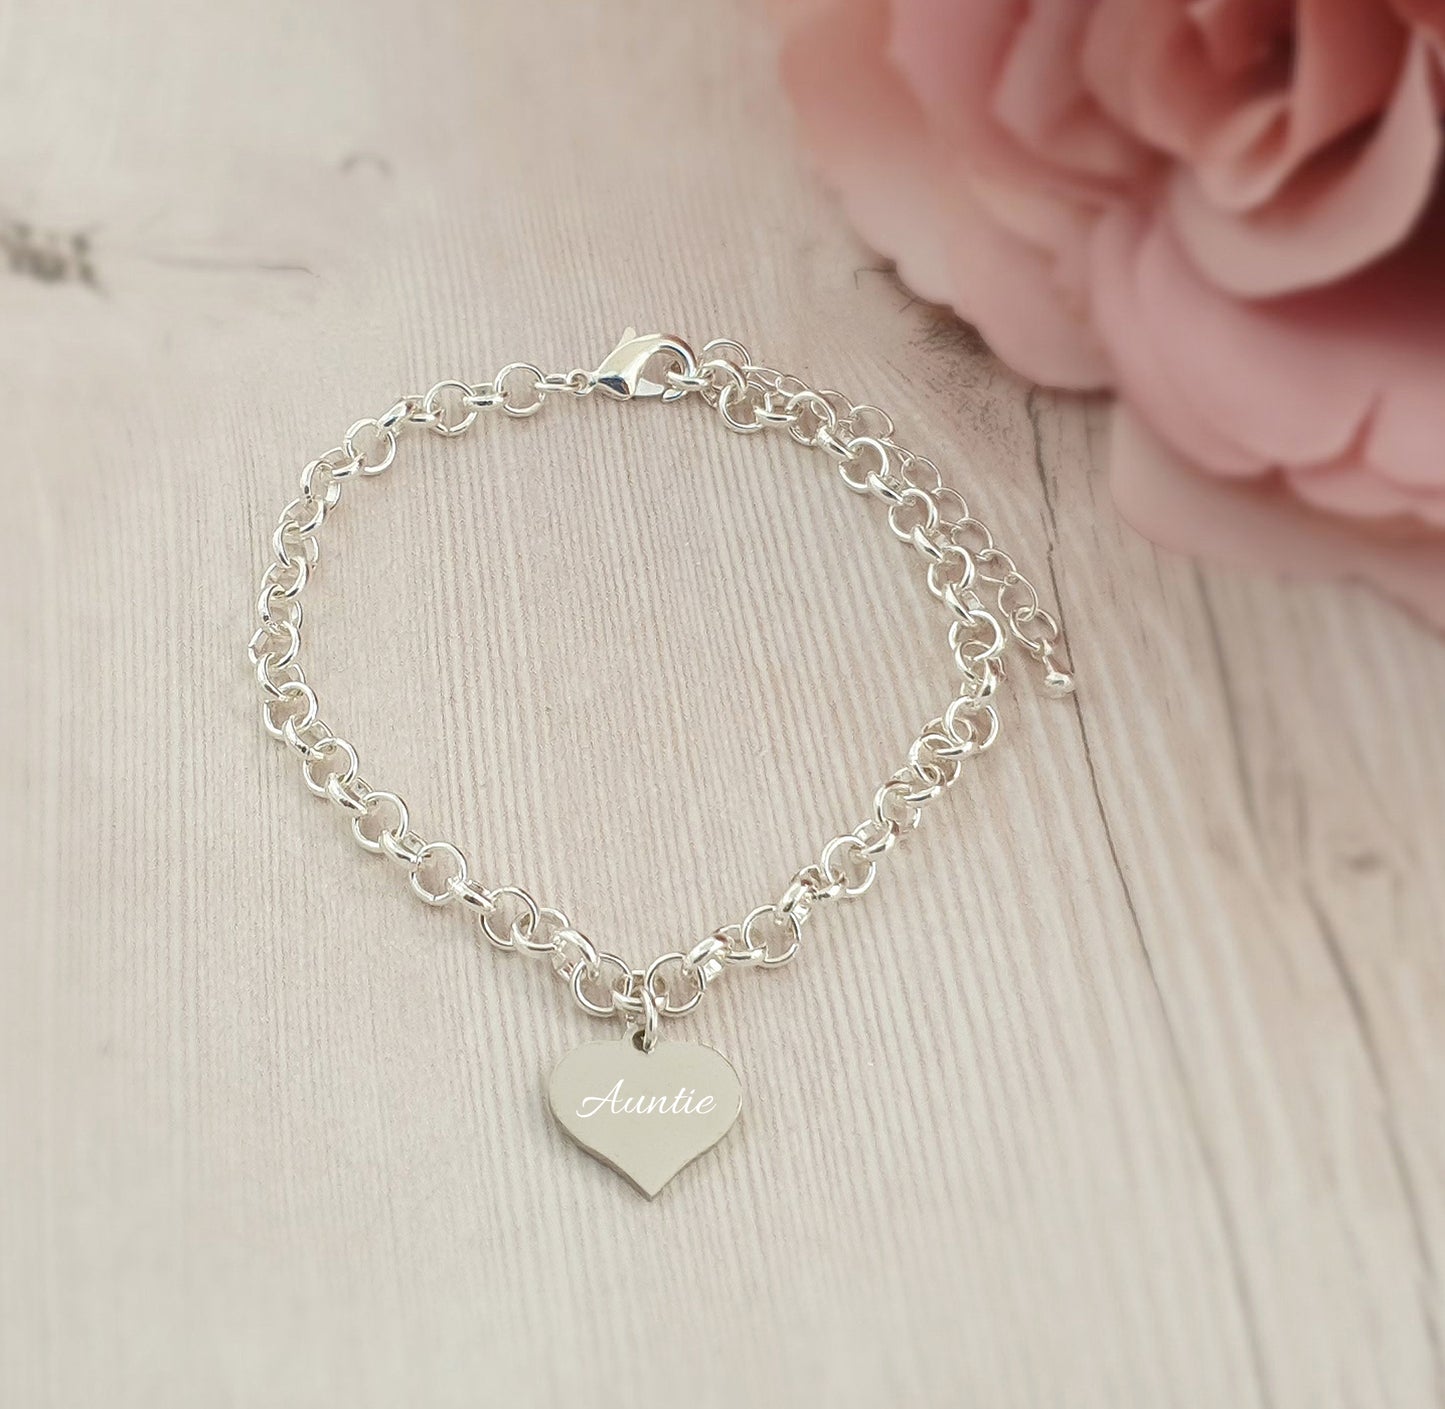 Auntie Engraved Heart Charm Link Bracelet, Gift for Women